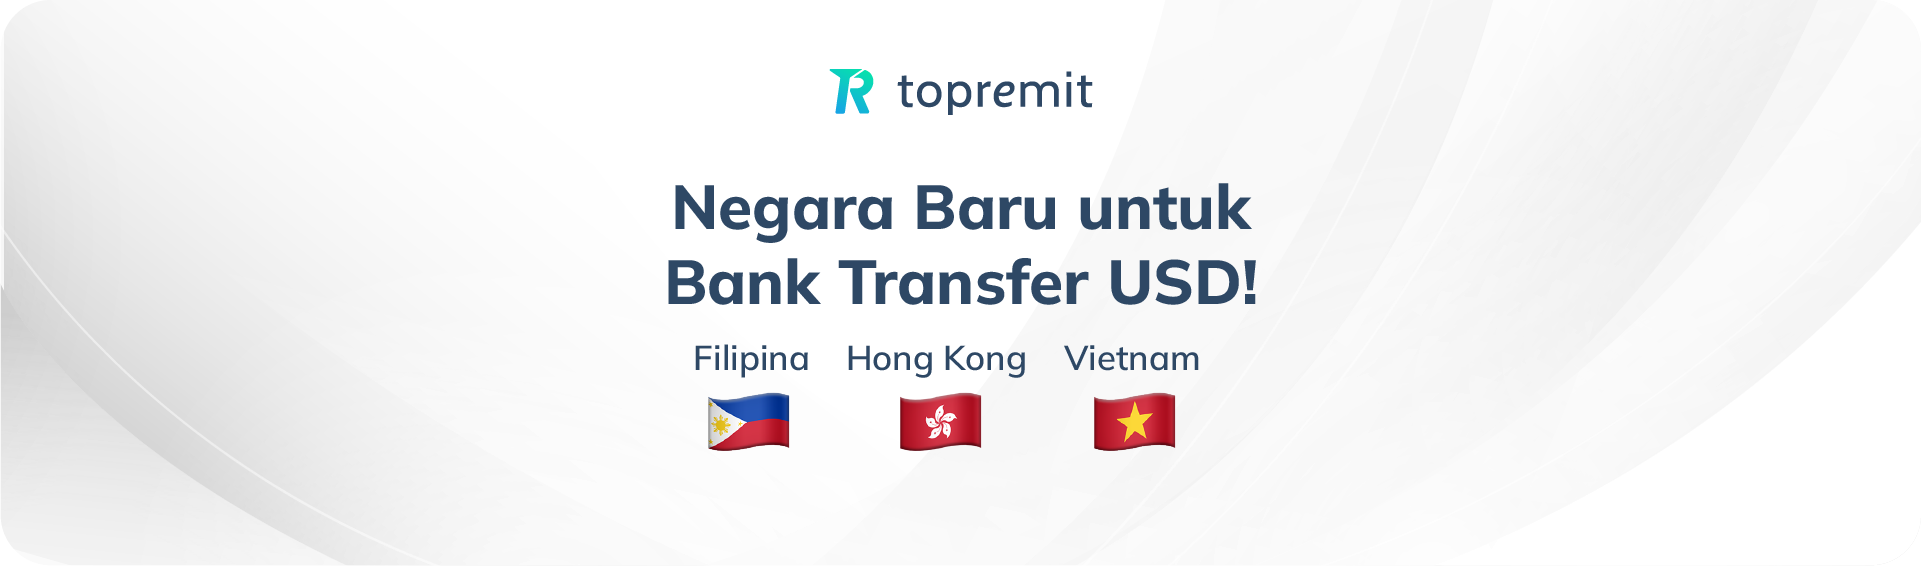 Bank Transfer USD